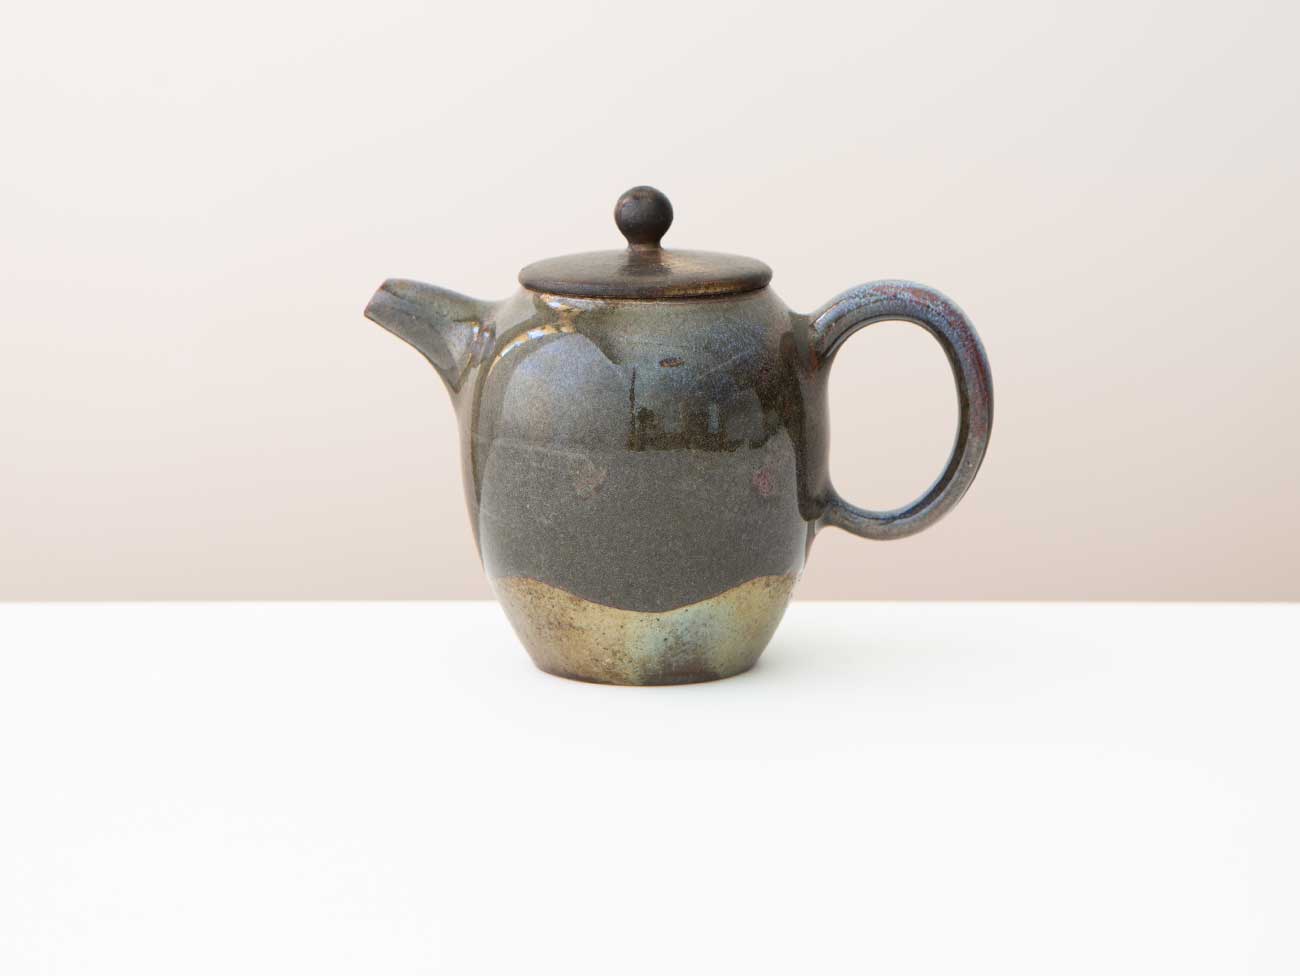 Pi Dan. Shino and Cobalt glazed wood-fired teapot.